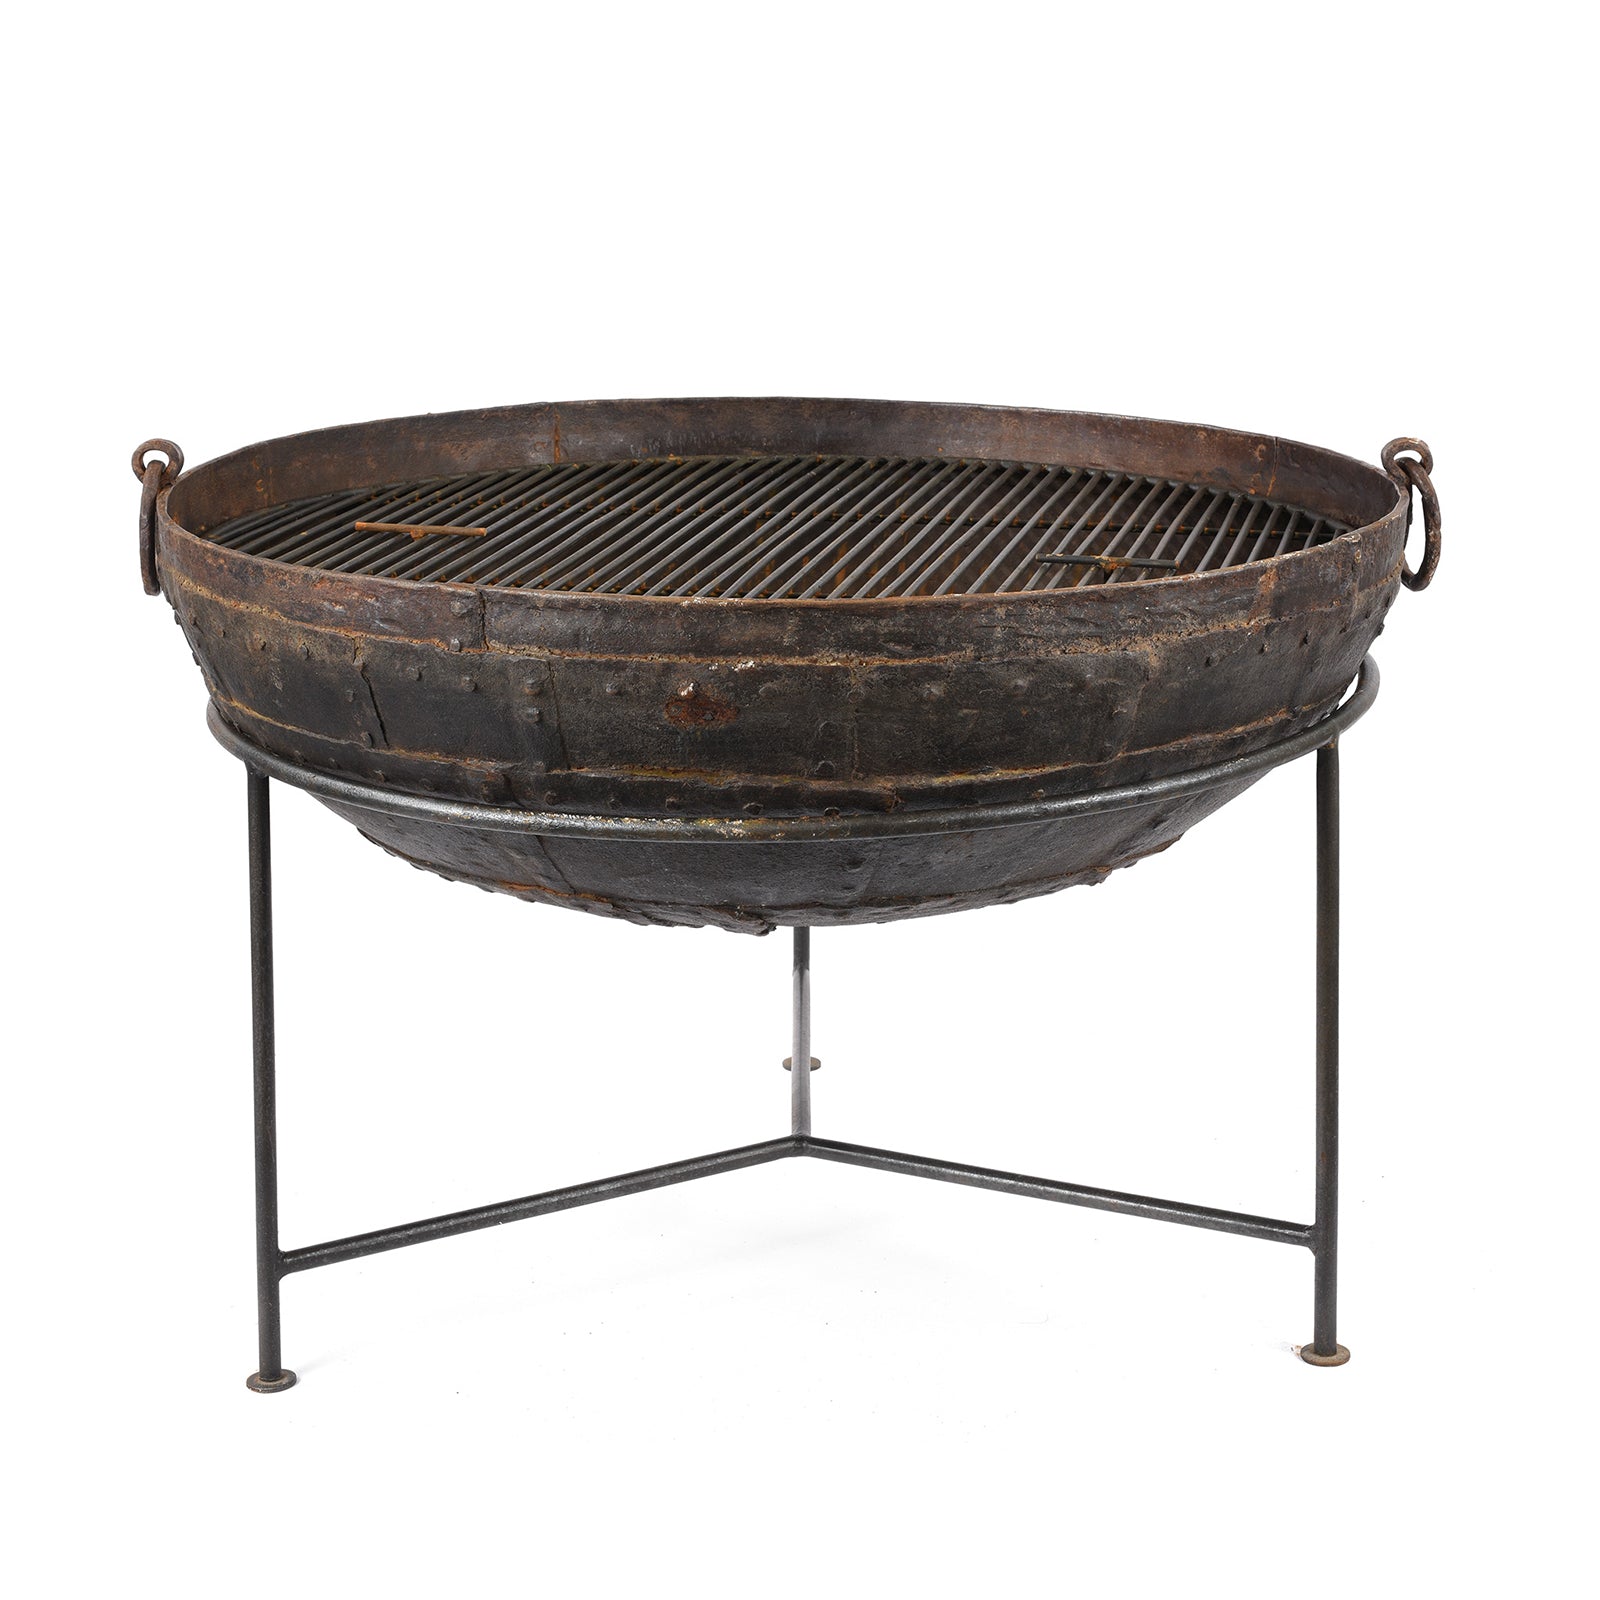 Old Indian Original Kadai Fire Bowl - 90cm diameter | Indigo Antiques